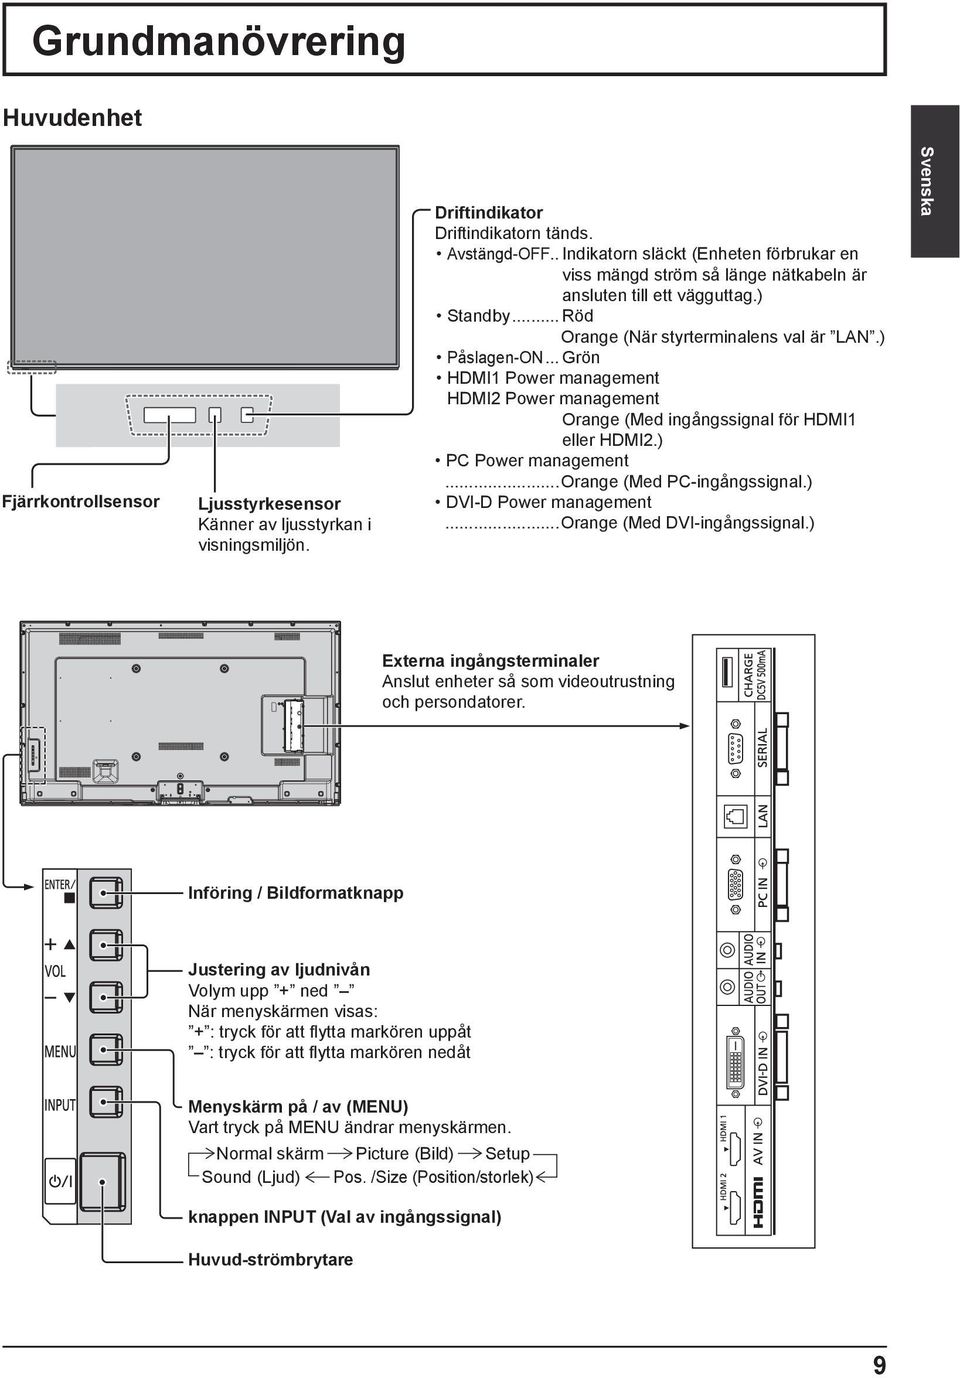 .. Grön HDMI1 Power management HDMI2 Power management Orange (Med ingångssignal för HDMI1 eller HDMI2.) PC Power management... Orange (Med PC-ingångssignal.) DVI-D Power management.